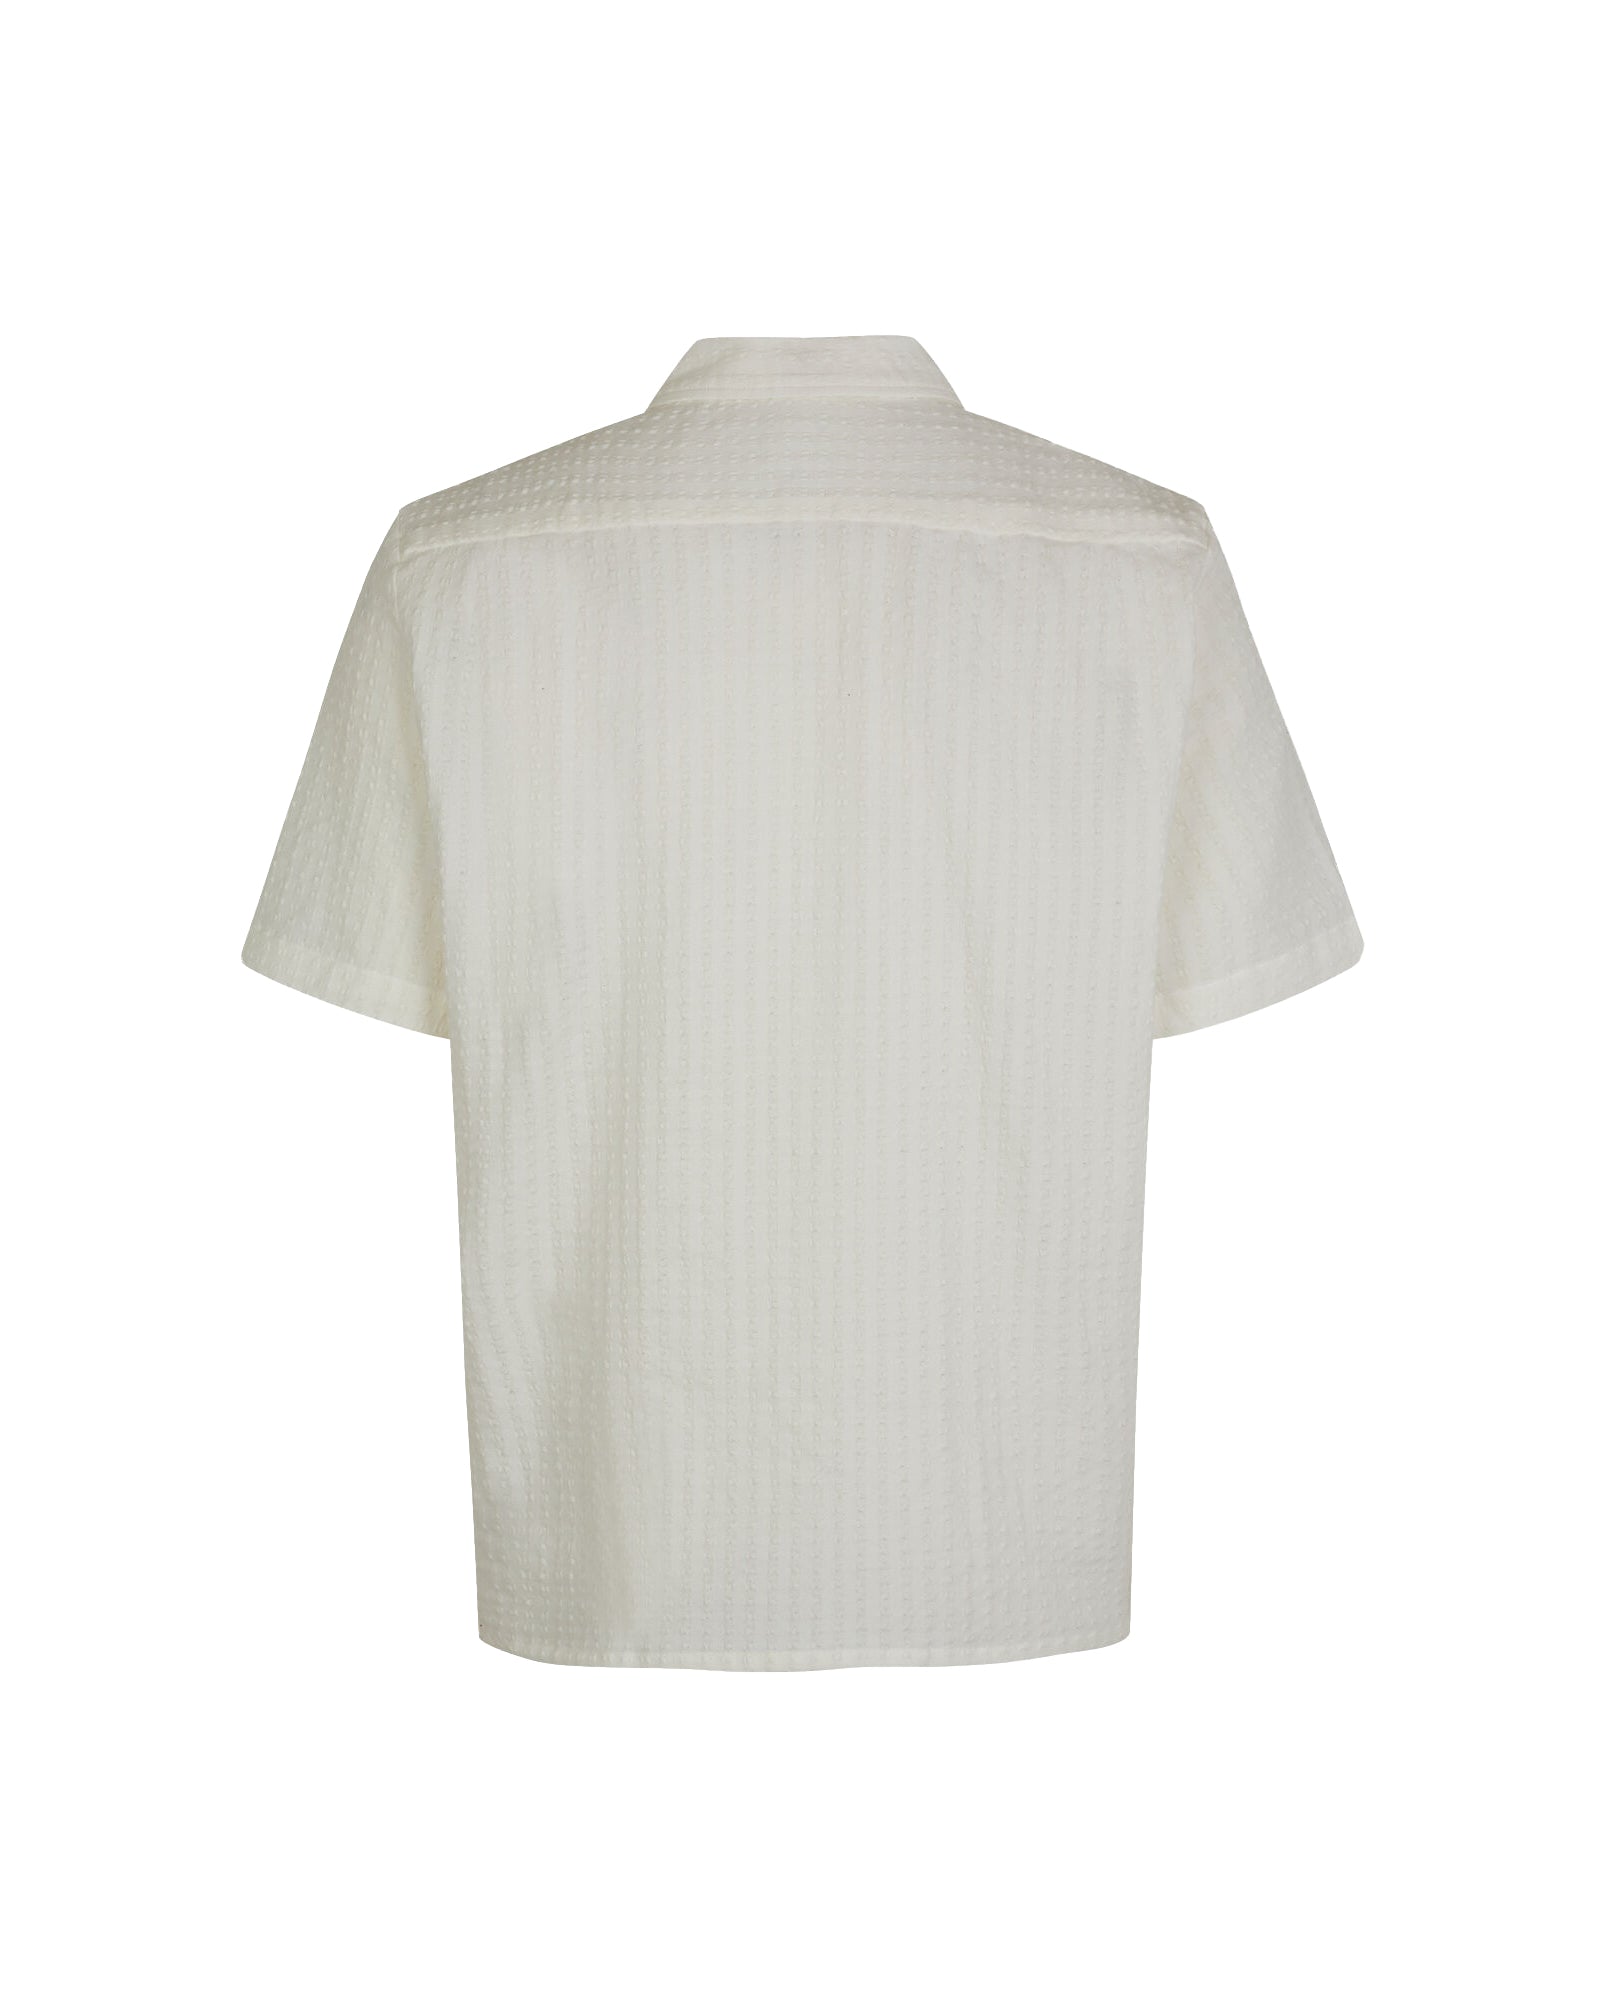 Avan JX 14698 Shirt - White